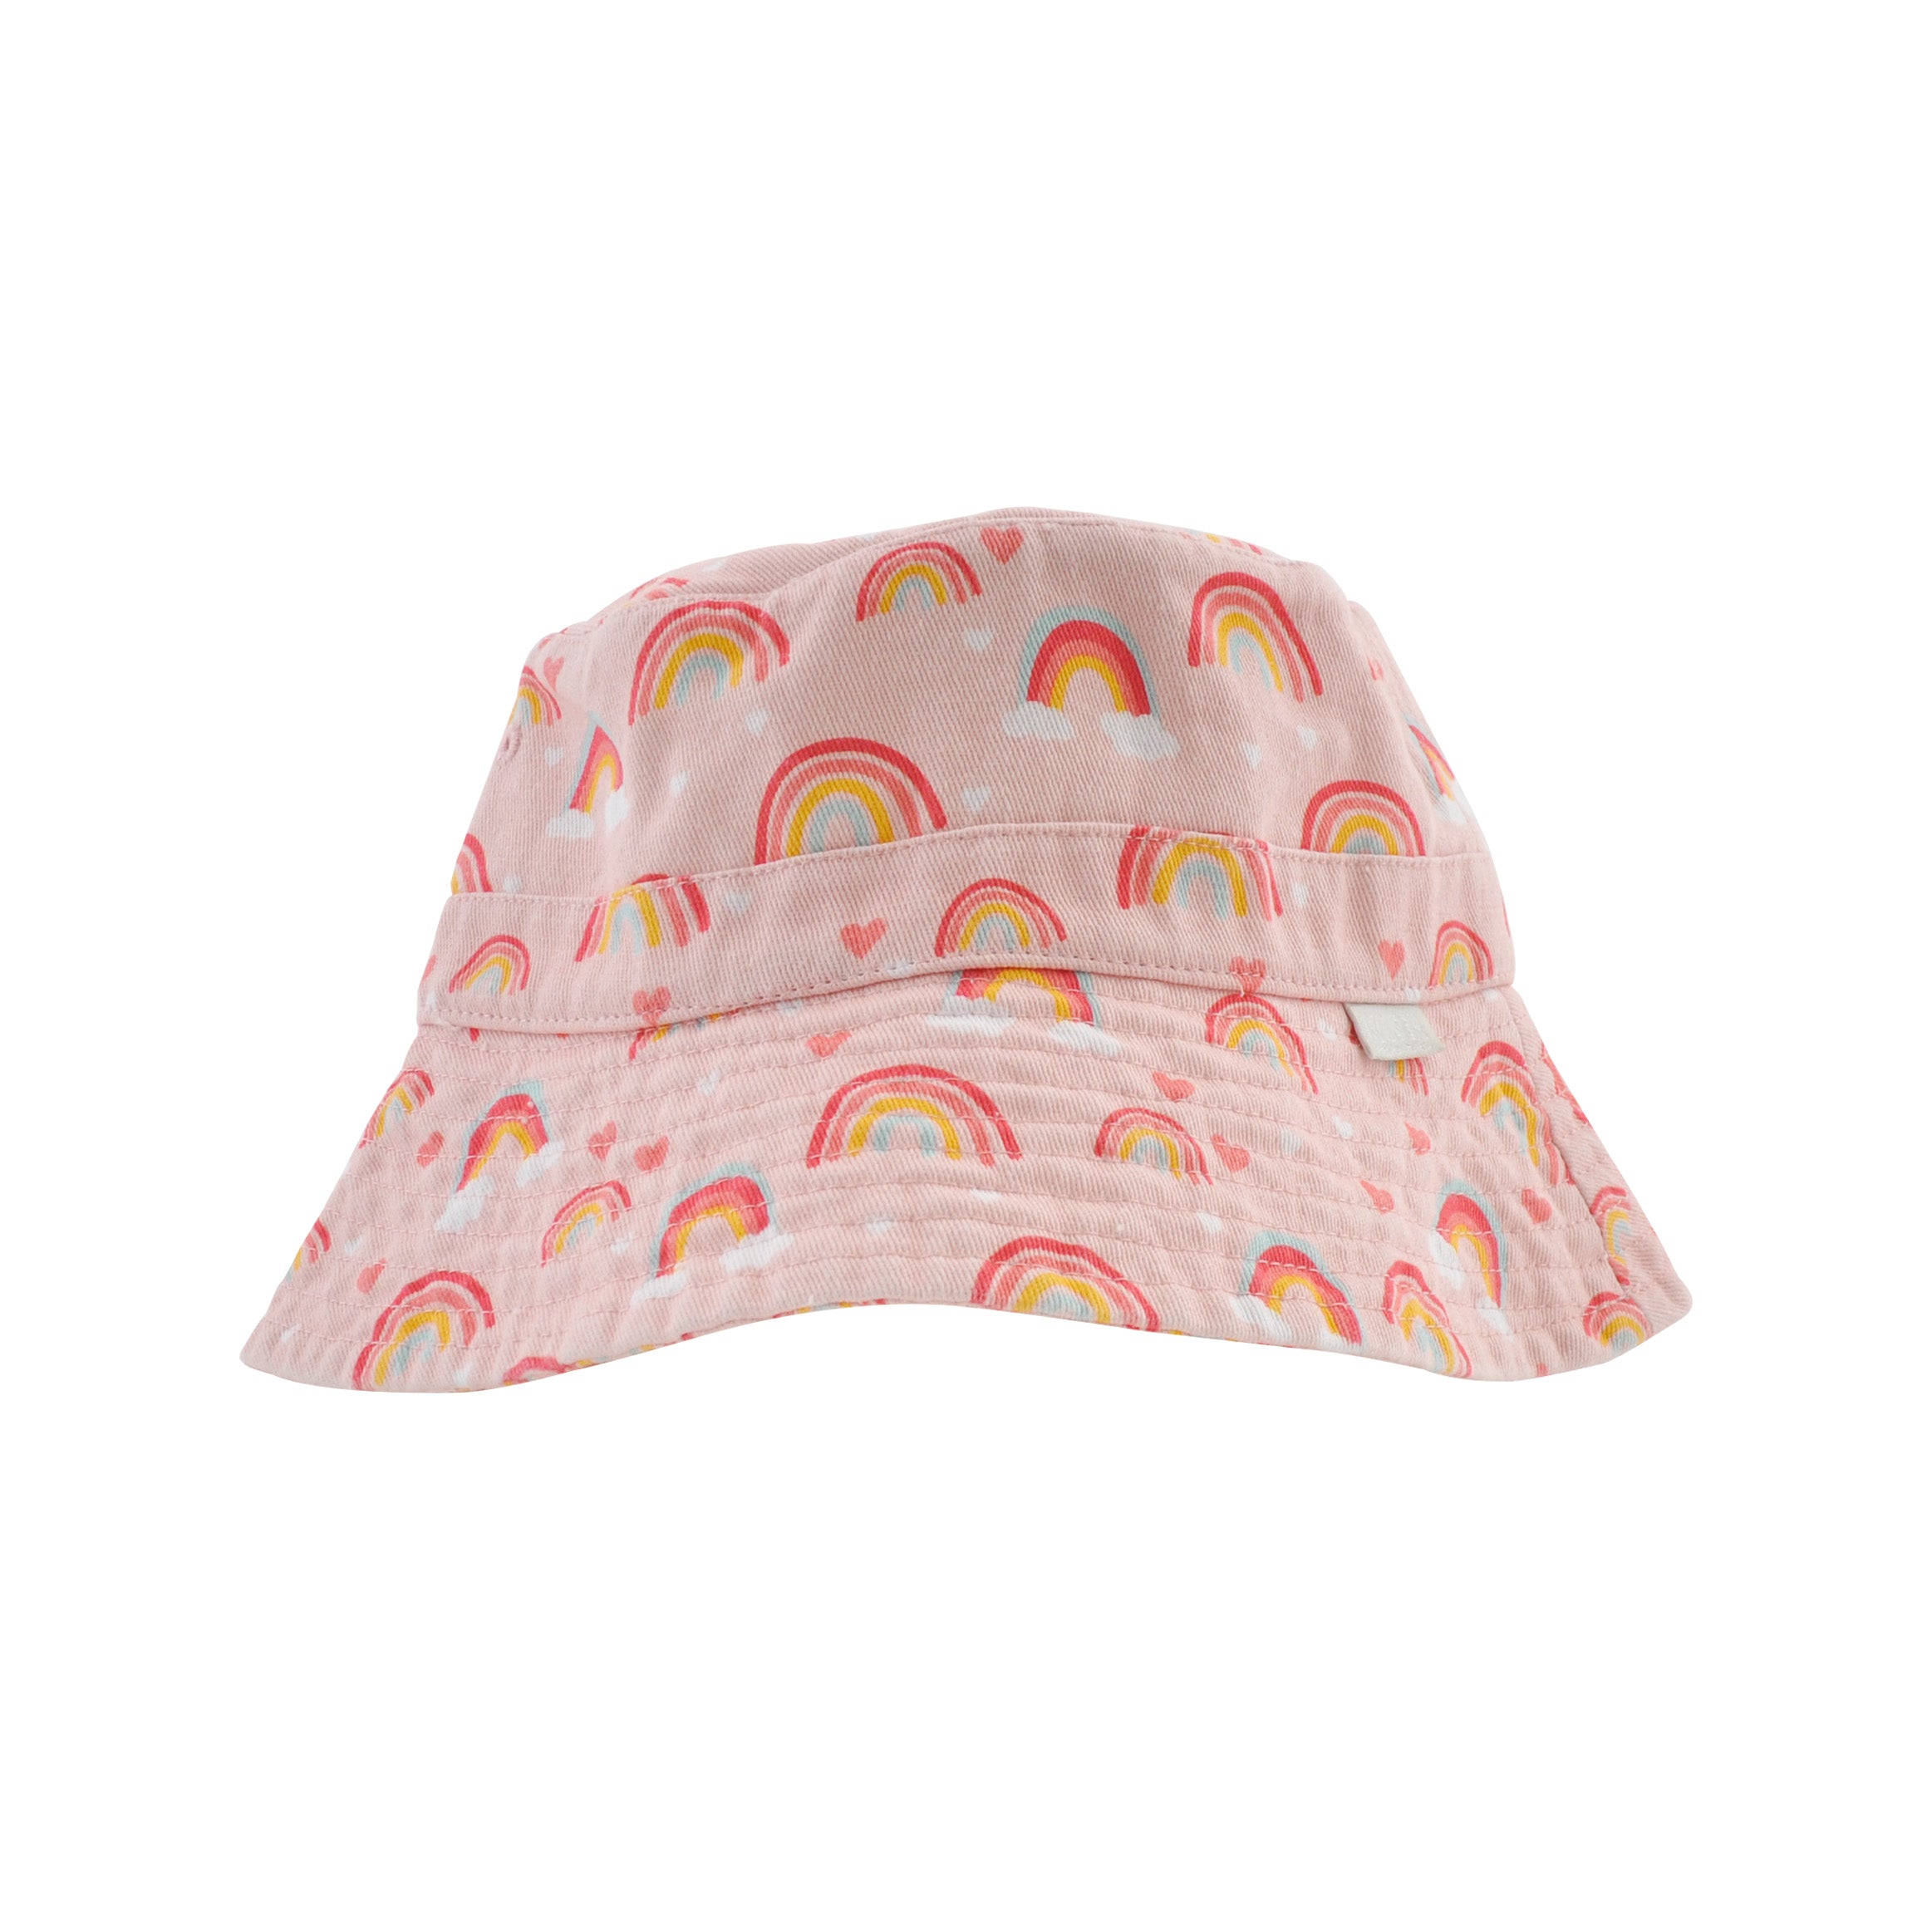 Bucket Hat - Over The Rainbow Lge